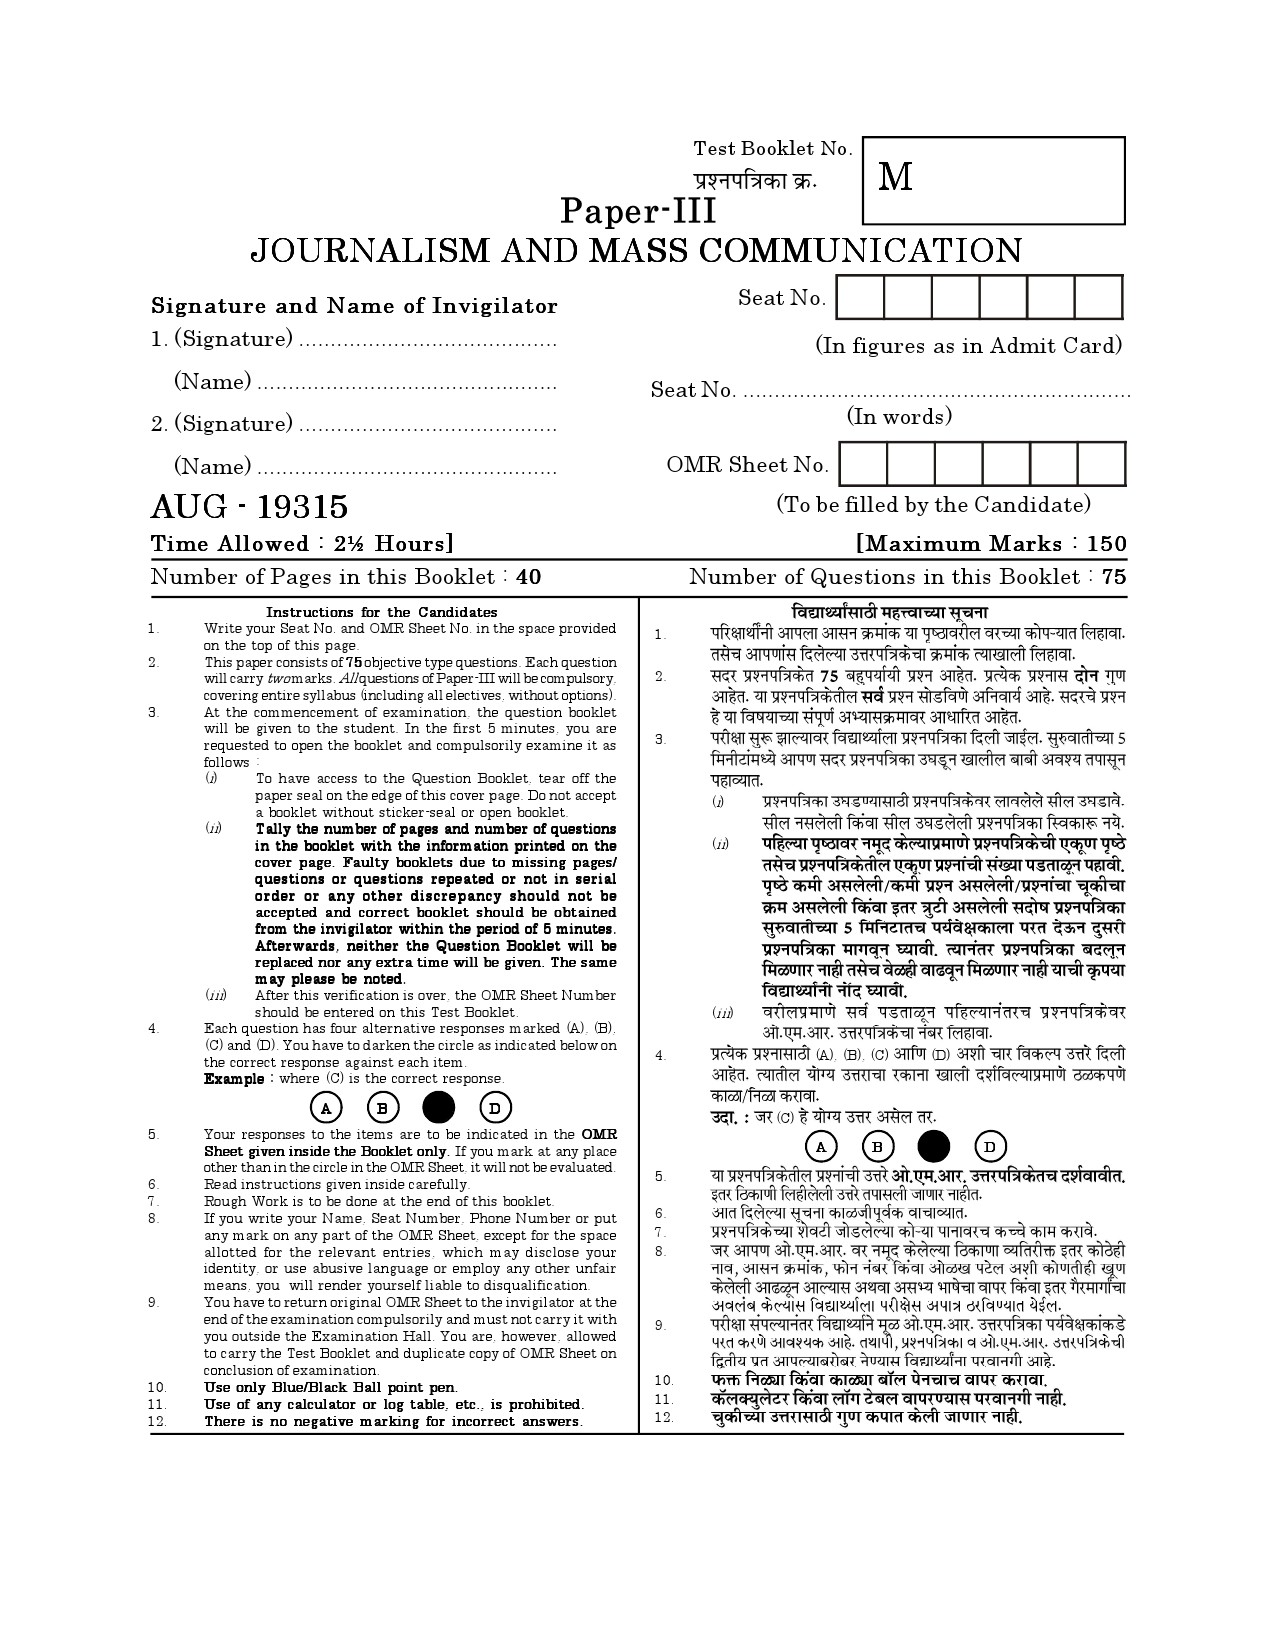 Maharashtra SET Journalism and Mass Communication Question Paper III August 2015 1